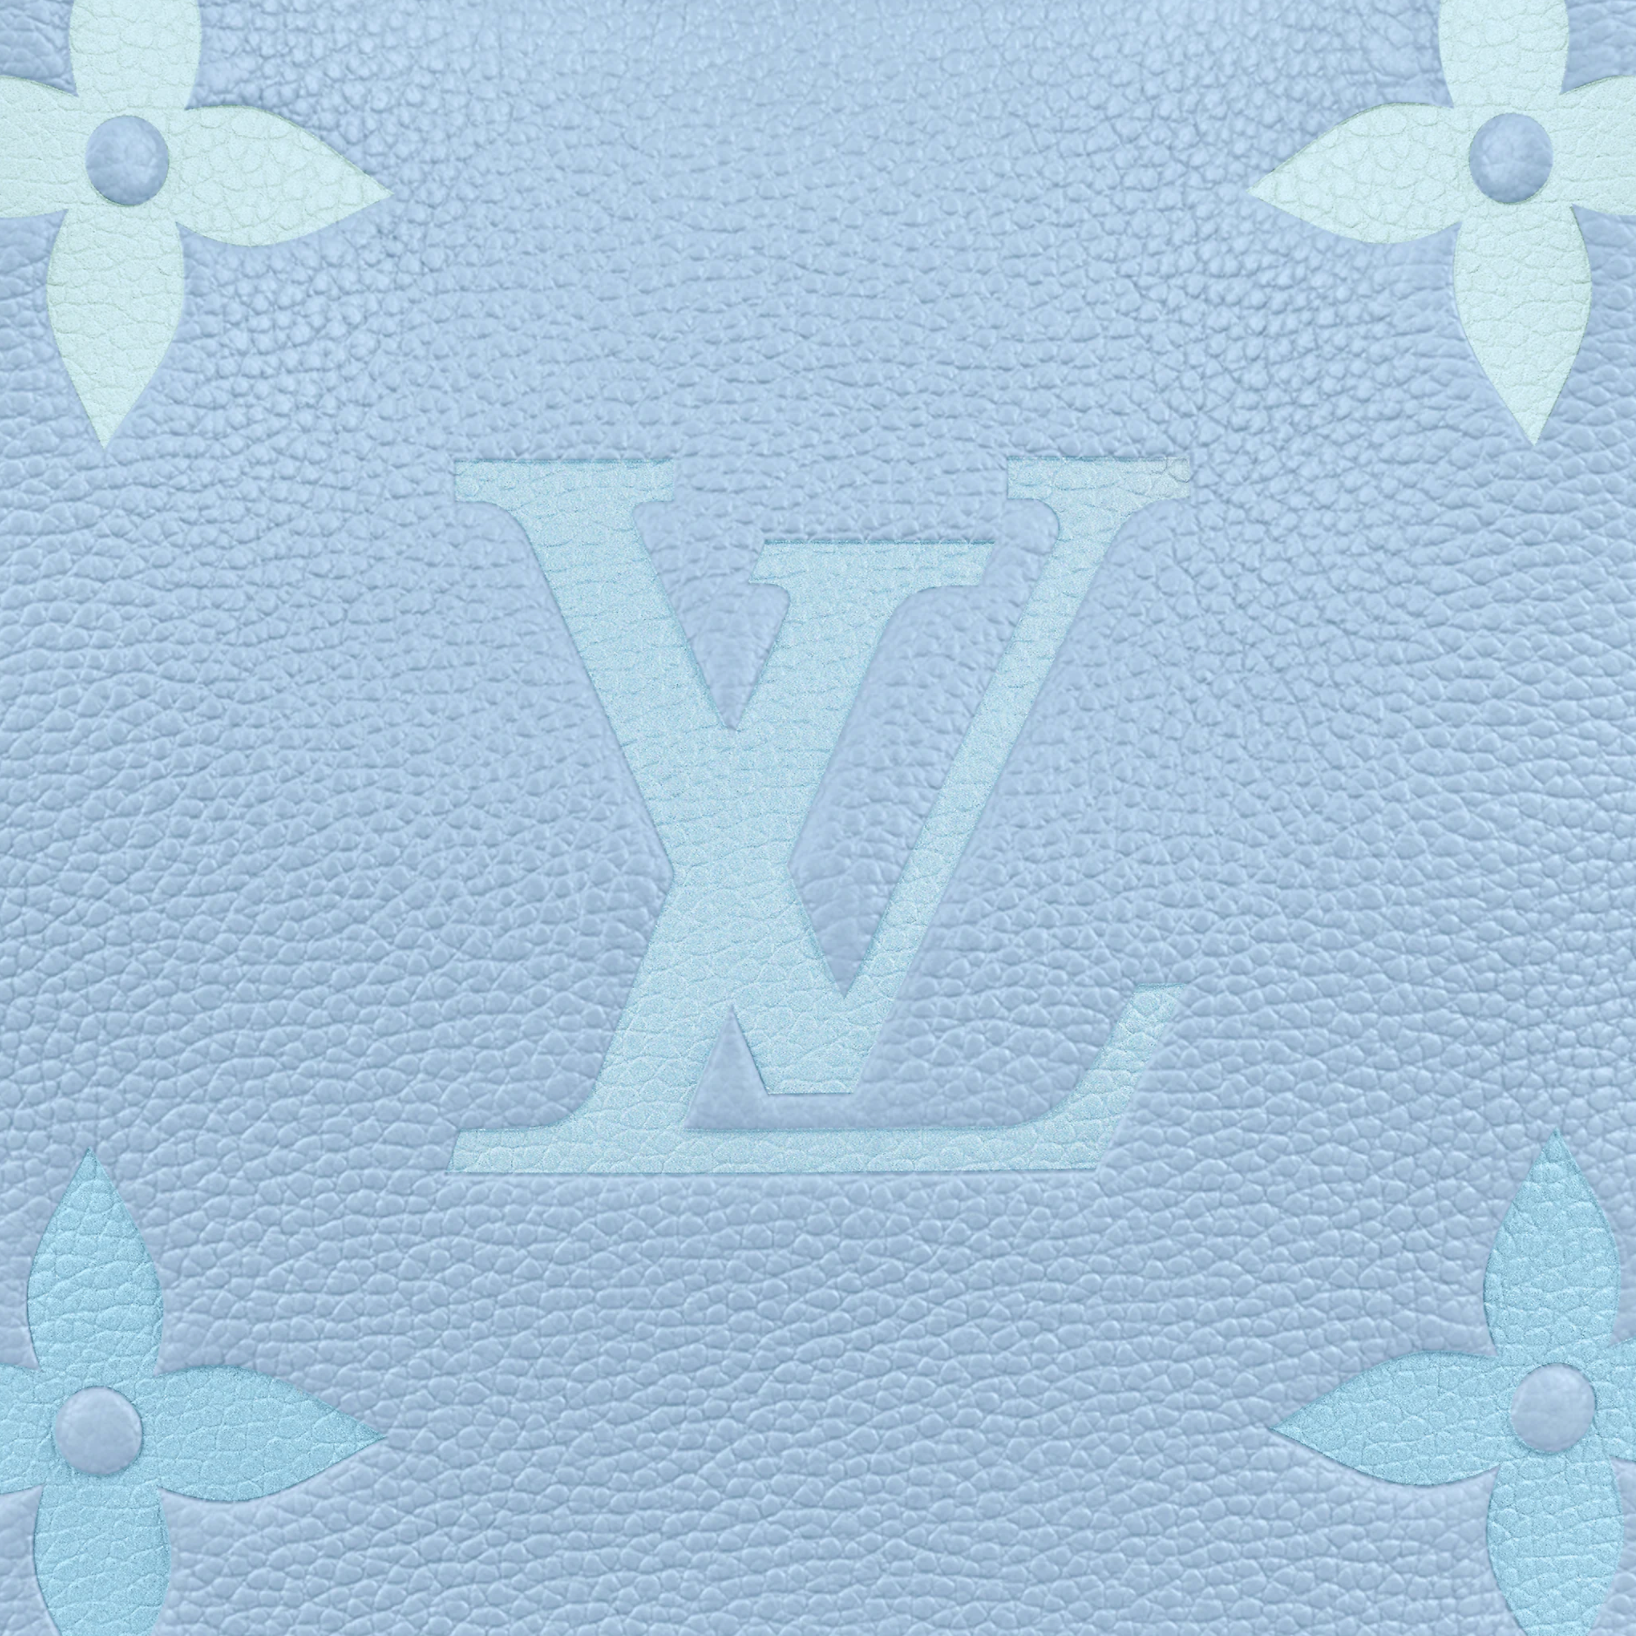 Louis Vuitton Wallpaper Blue  Phone wallpaper patterns, Aesthetic